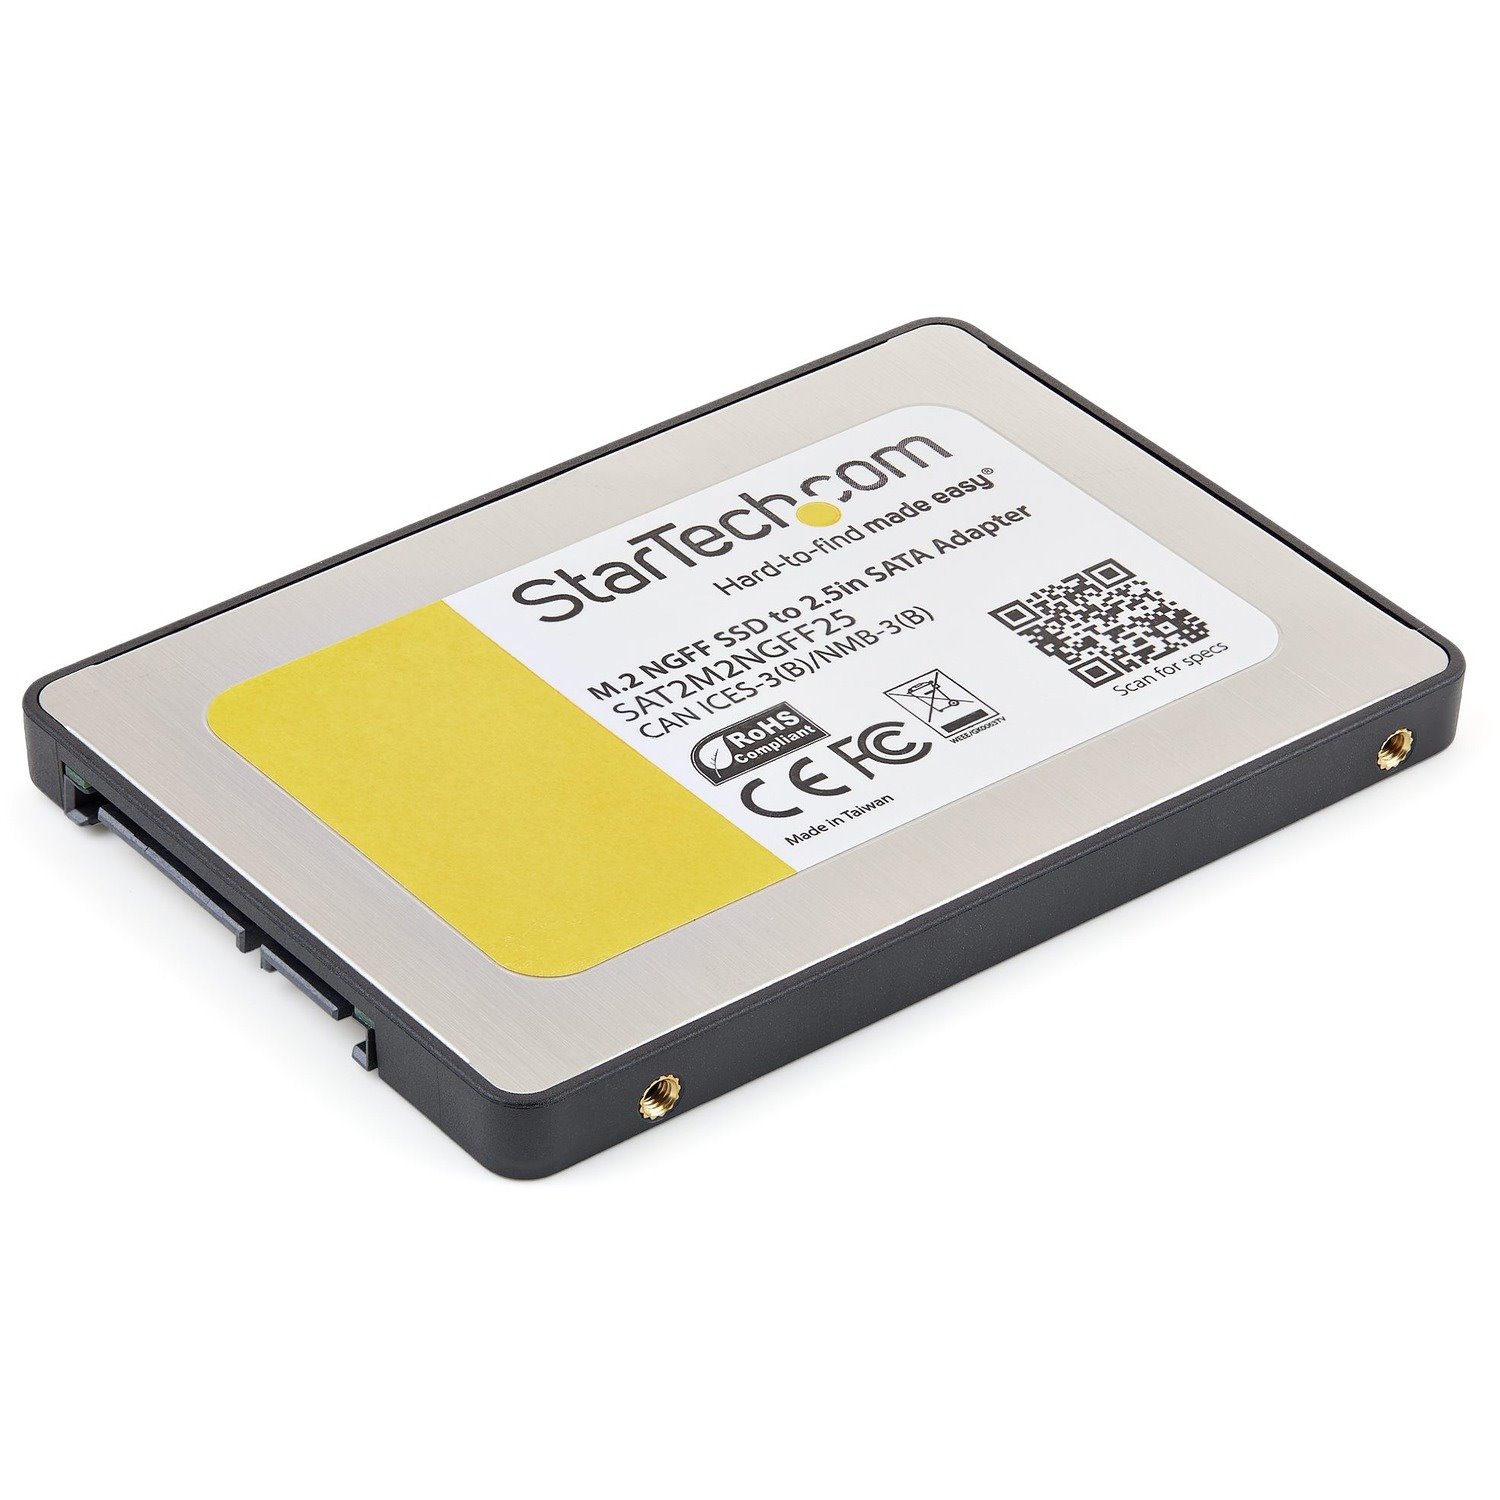 StarTech.com M.2 NGFF SSD to 2.5" SATA Adapter